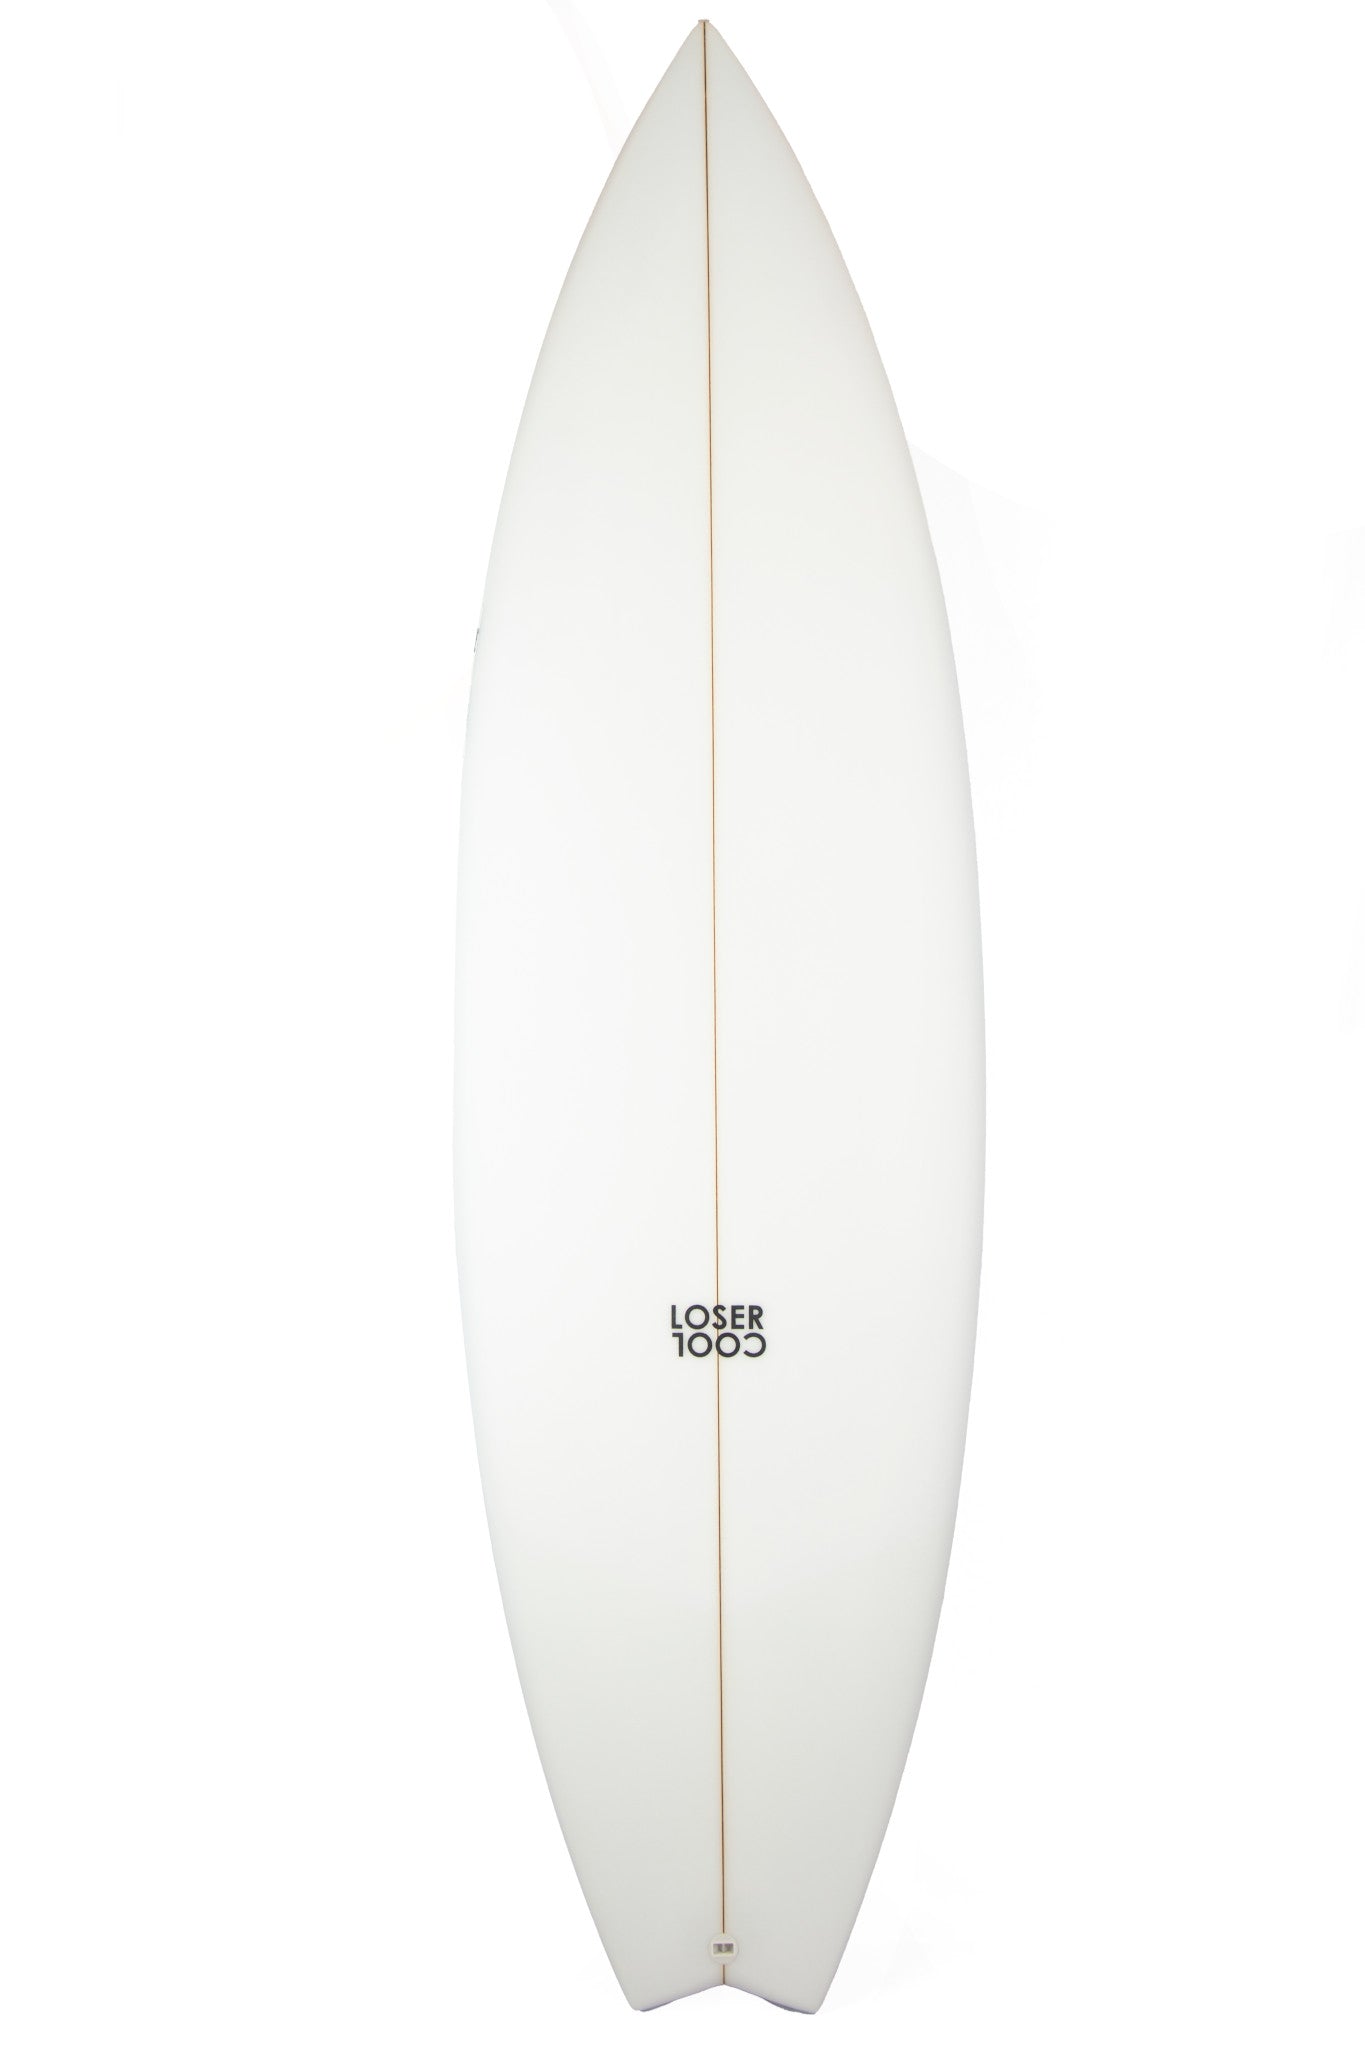 5'10" Loser Cool Surfboards 'Honey' Thruster